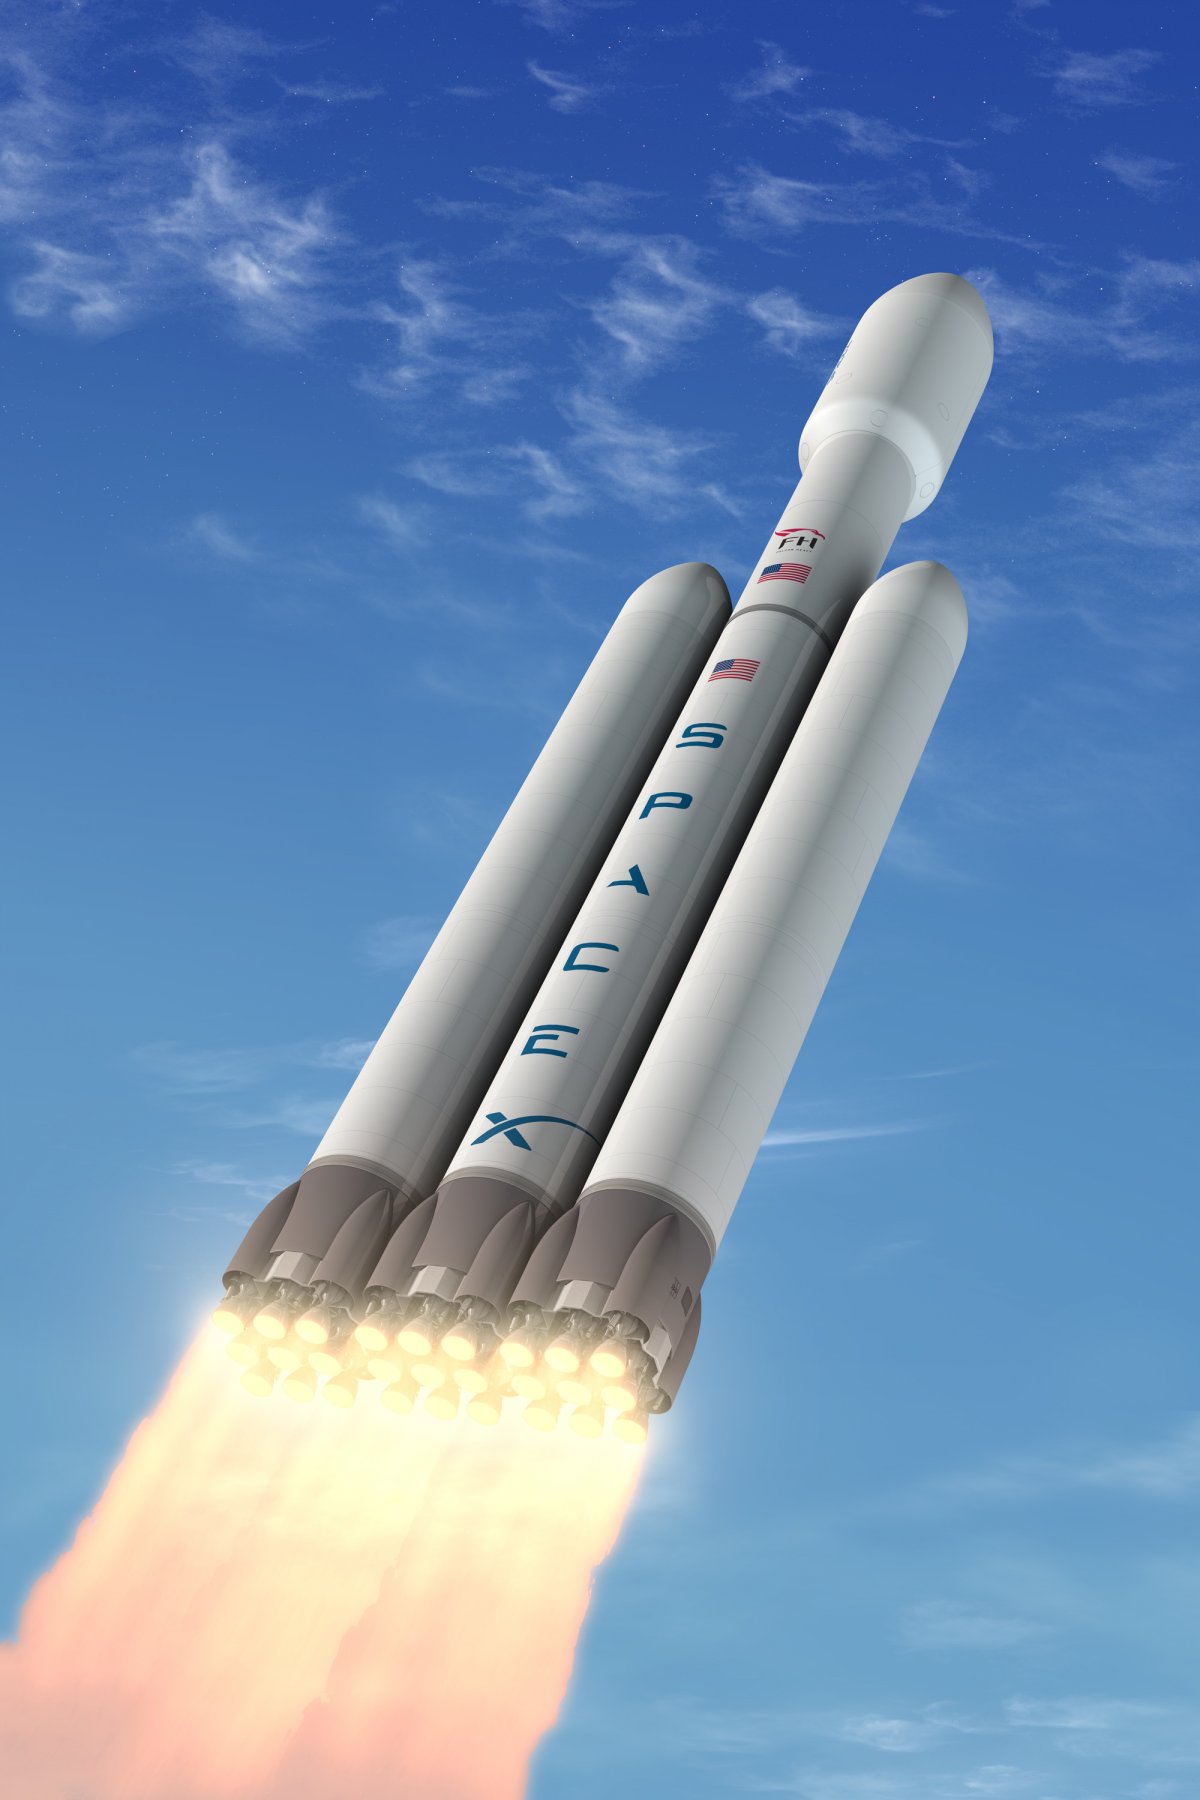 Simplistic SpaceX Wallpaper showing various Falcon rocket